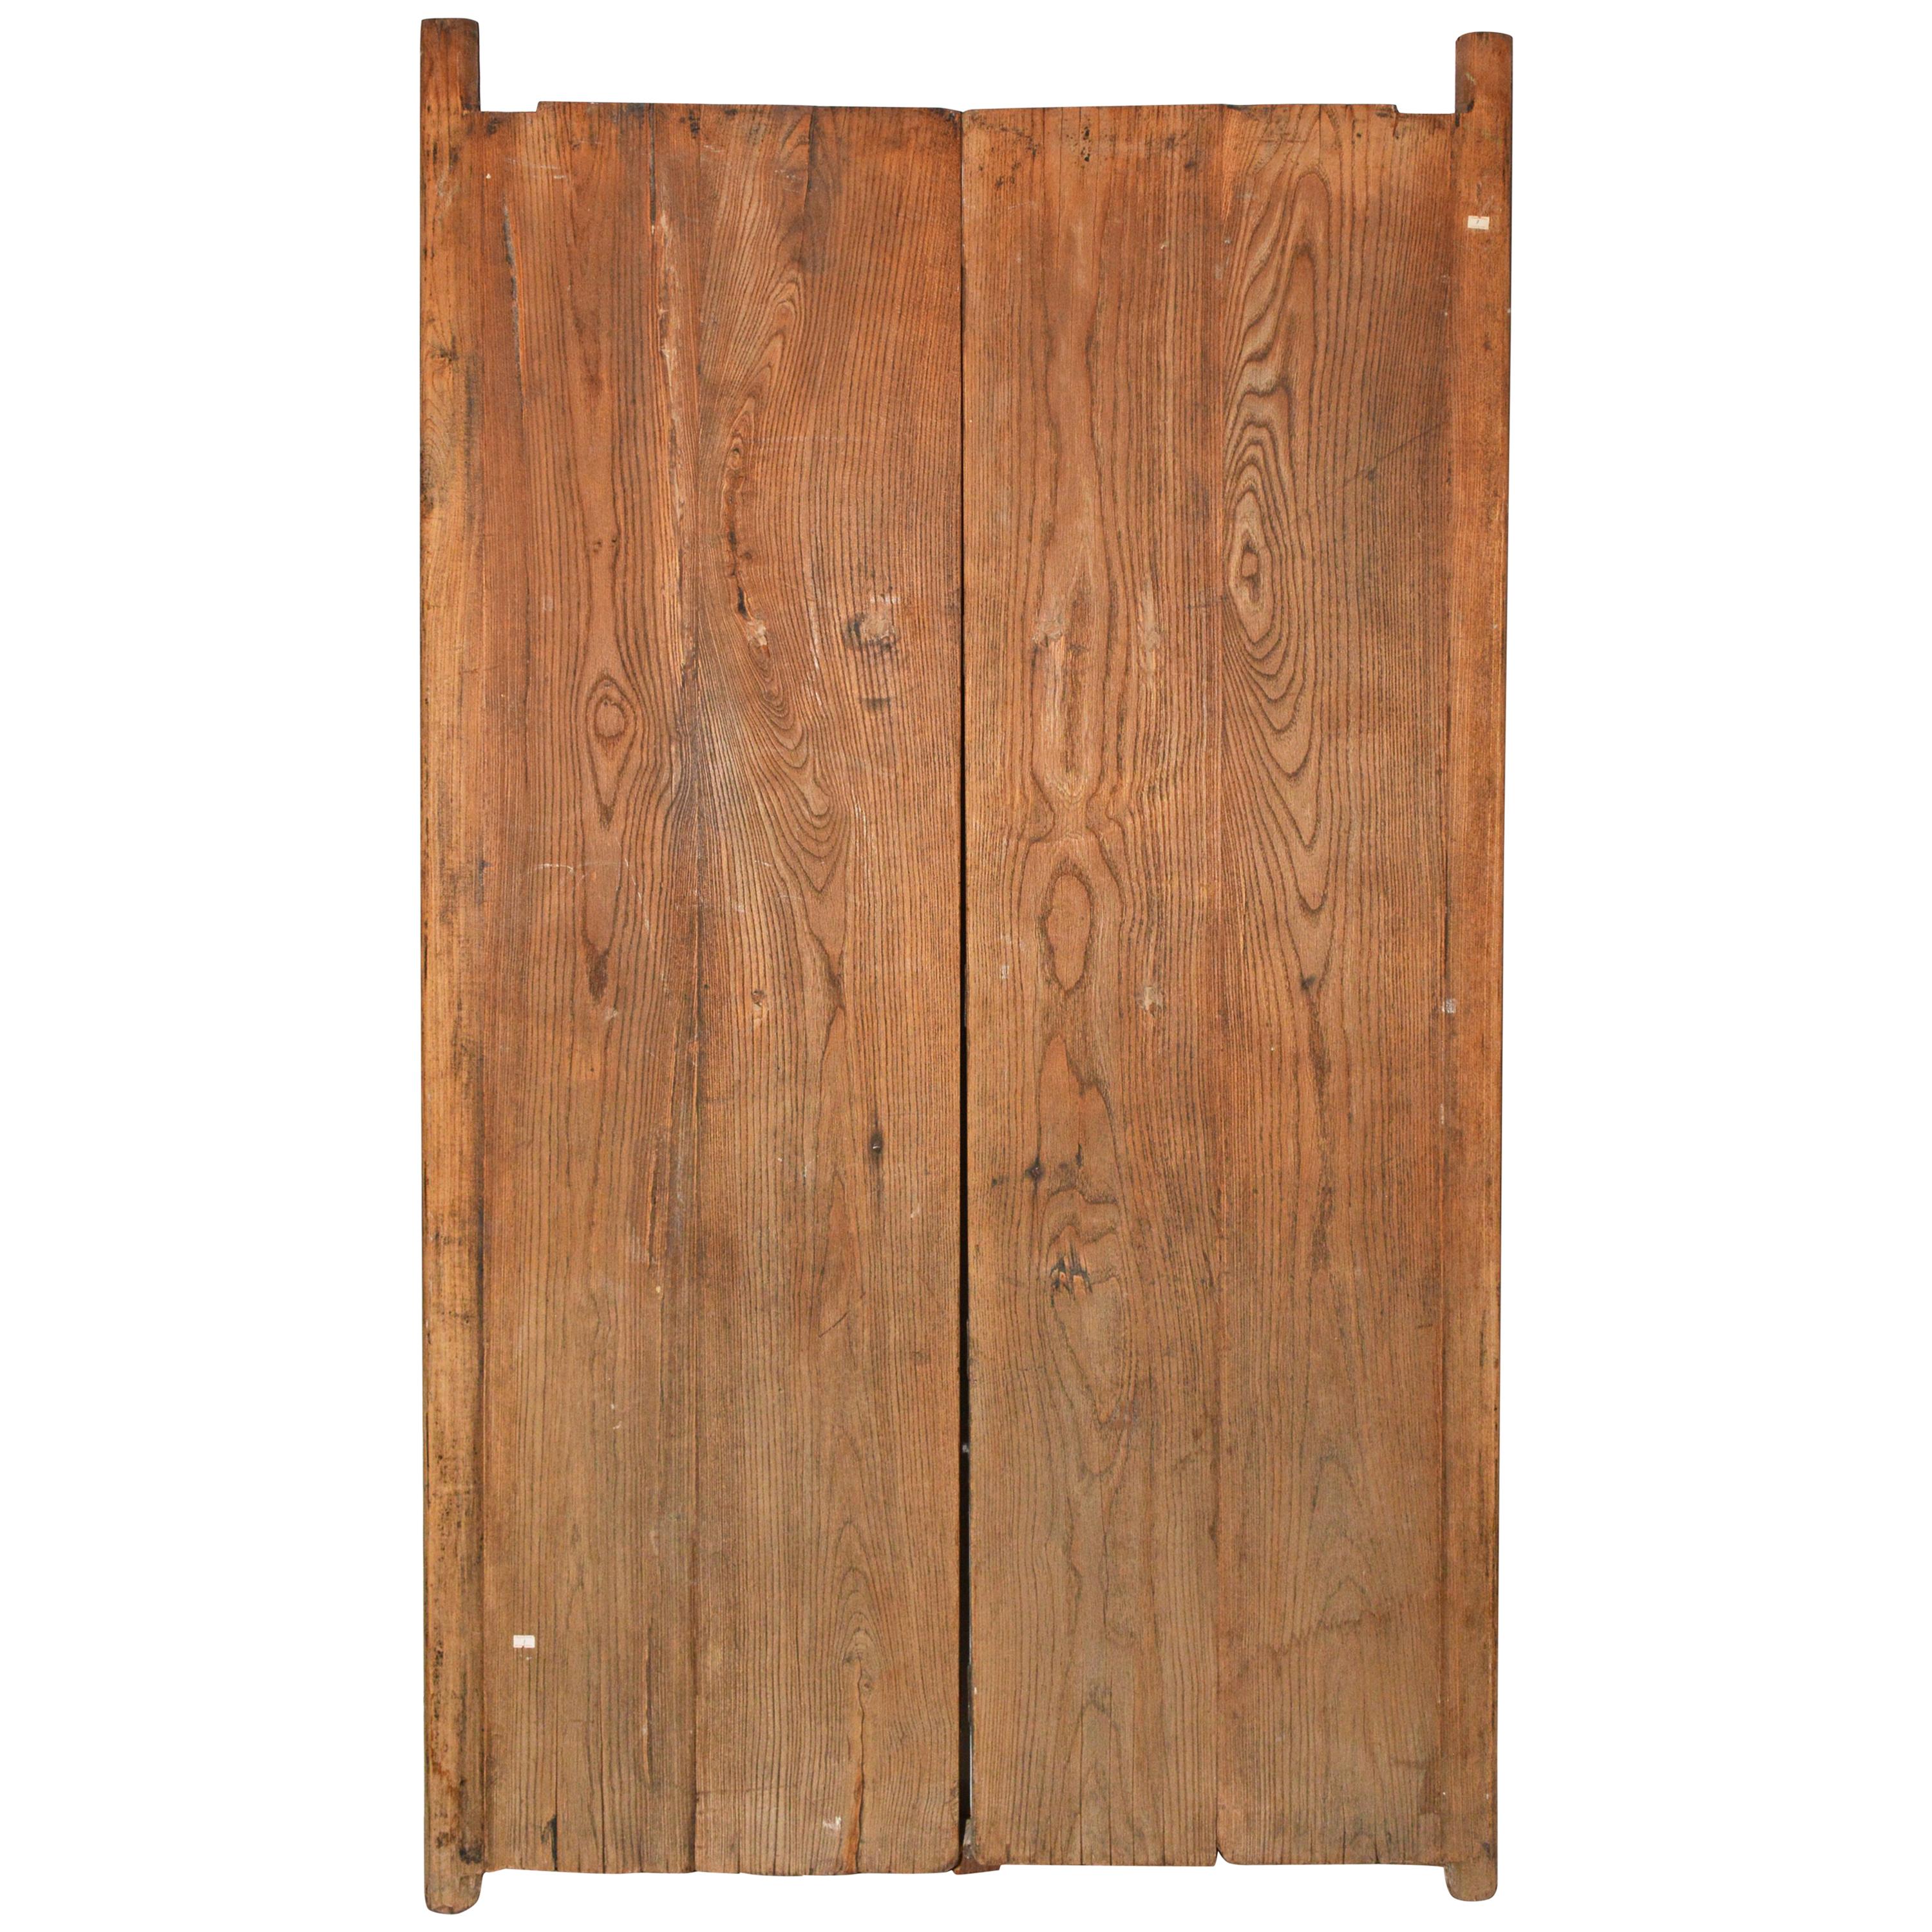 Pair of Rustic Antique Wood Doors